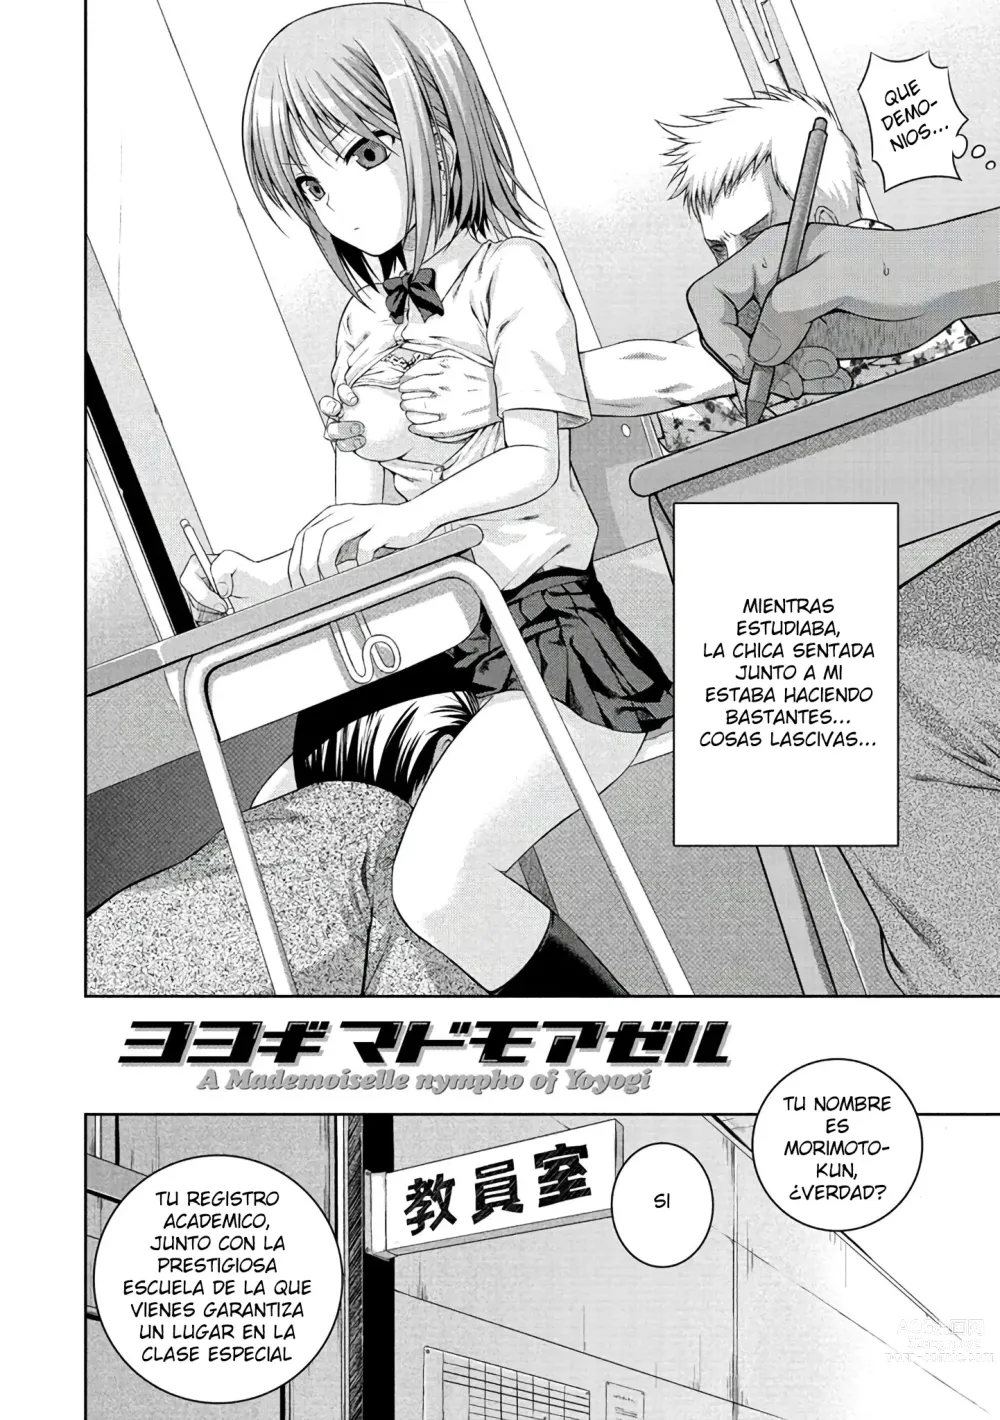 Page 194 of manga Prototype Mademoiselle